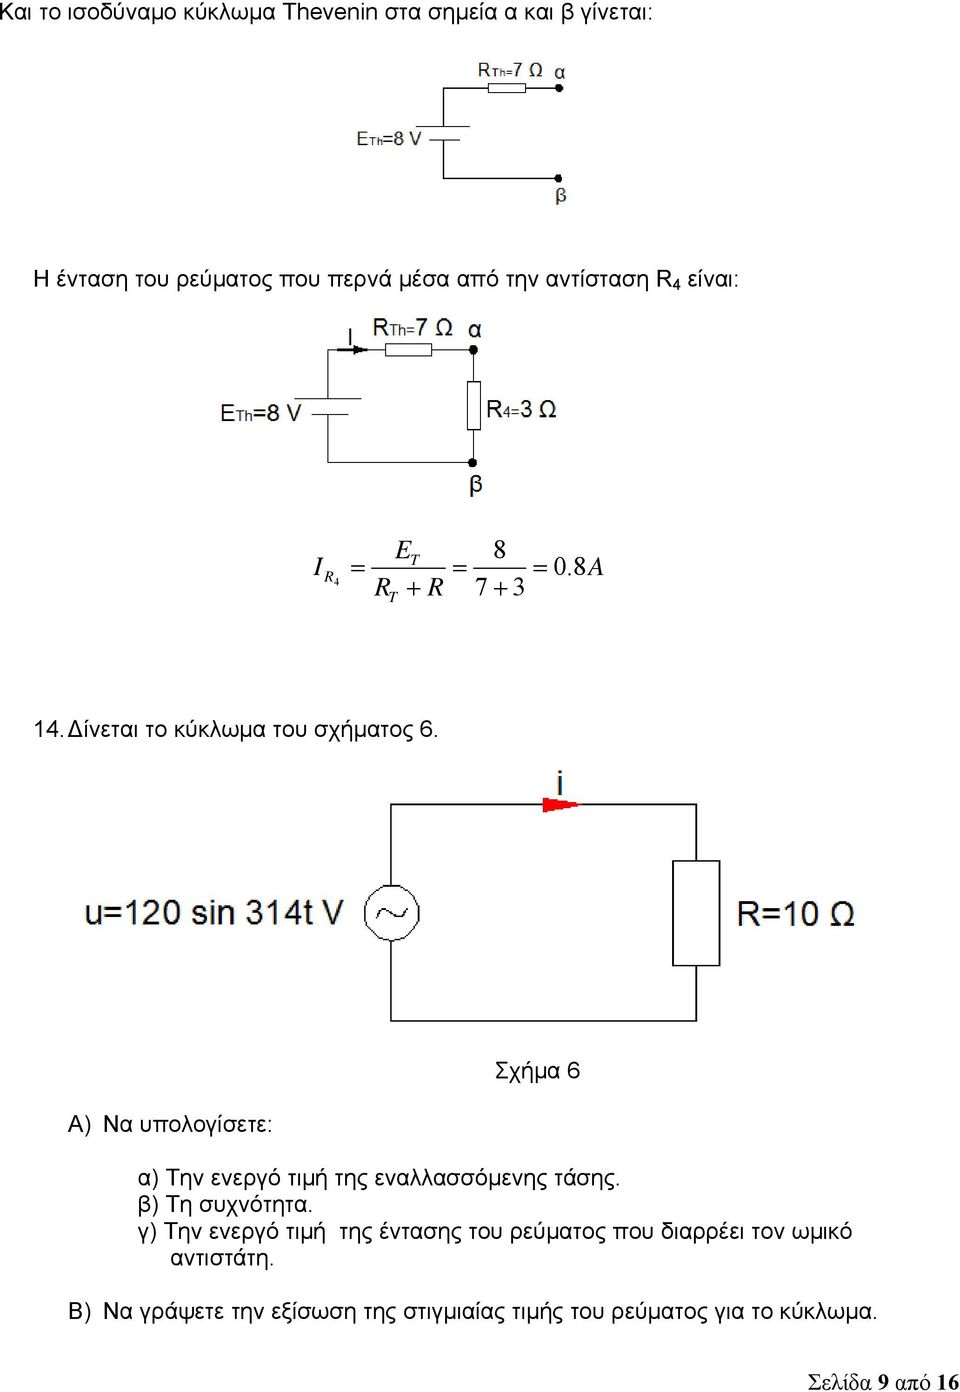 A) Να υπολογίσετε: Σχήμα 6 α) Την ενεργό τιμή της εναλλασσόμενης τάσης. β) Τη συχνότητα.